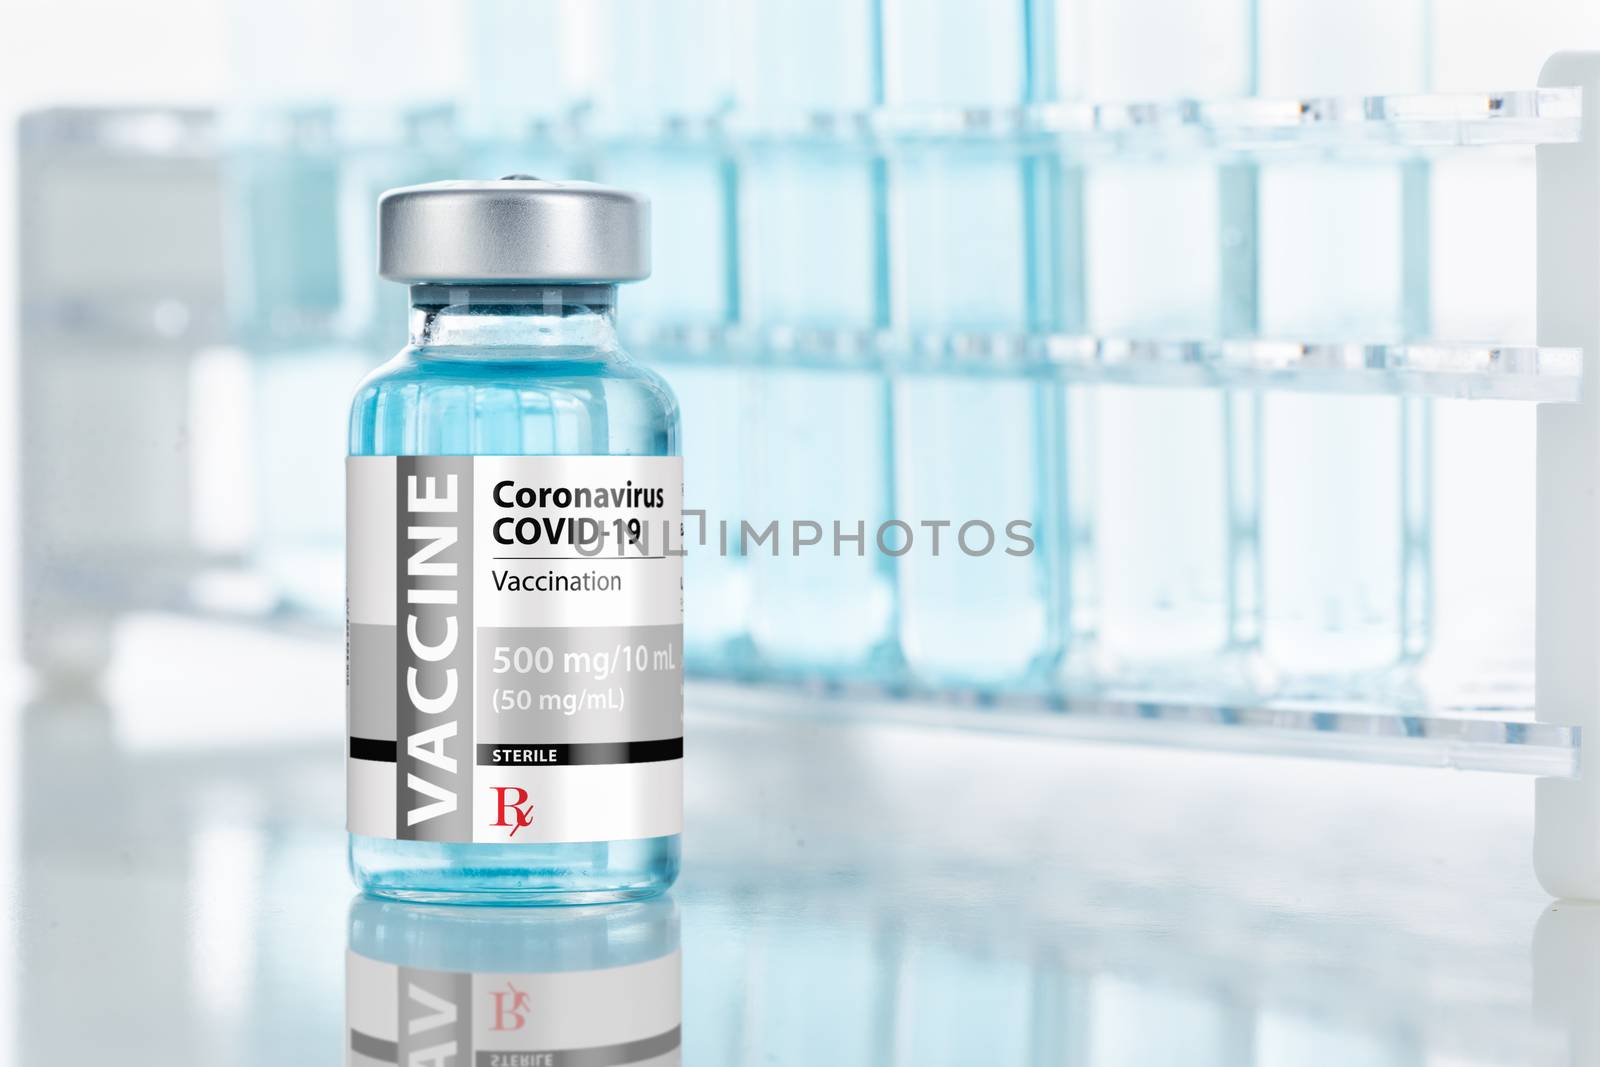 Coronavirus COVID-19 Vaccine Vial Near Test Tubes On Reflective Surface.